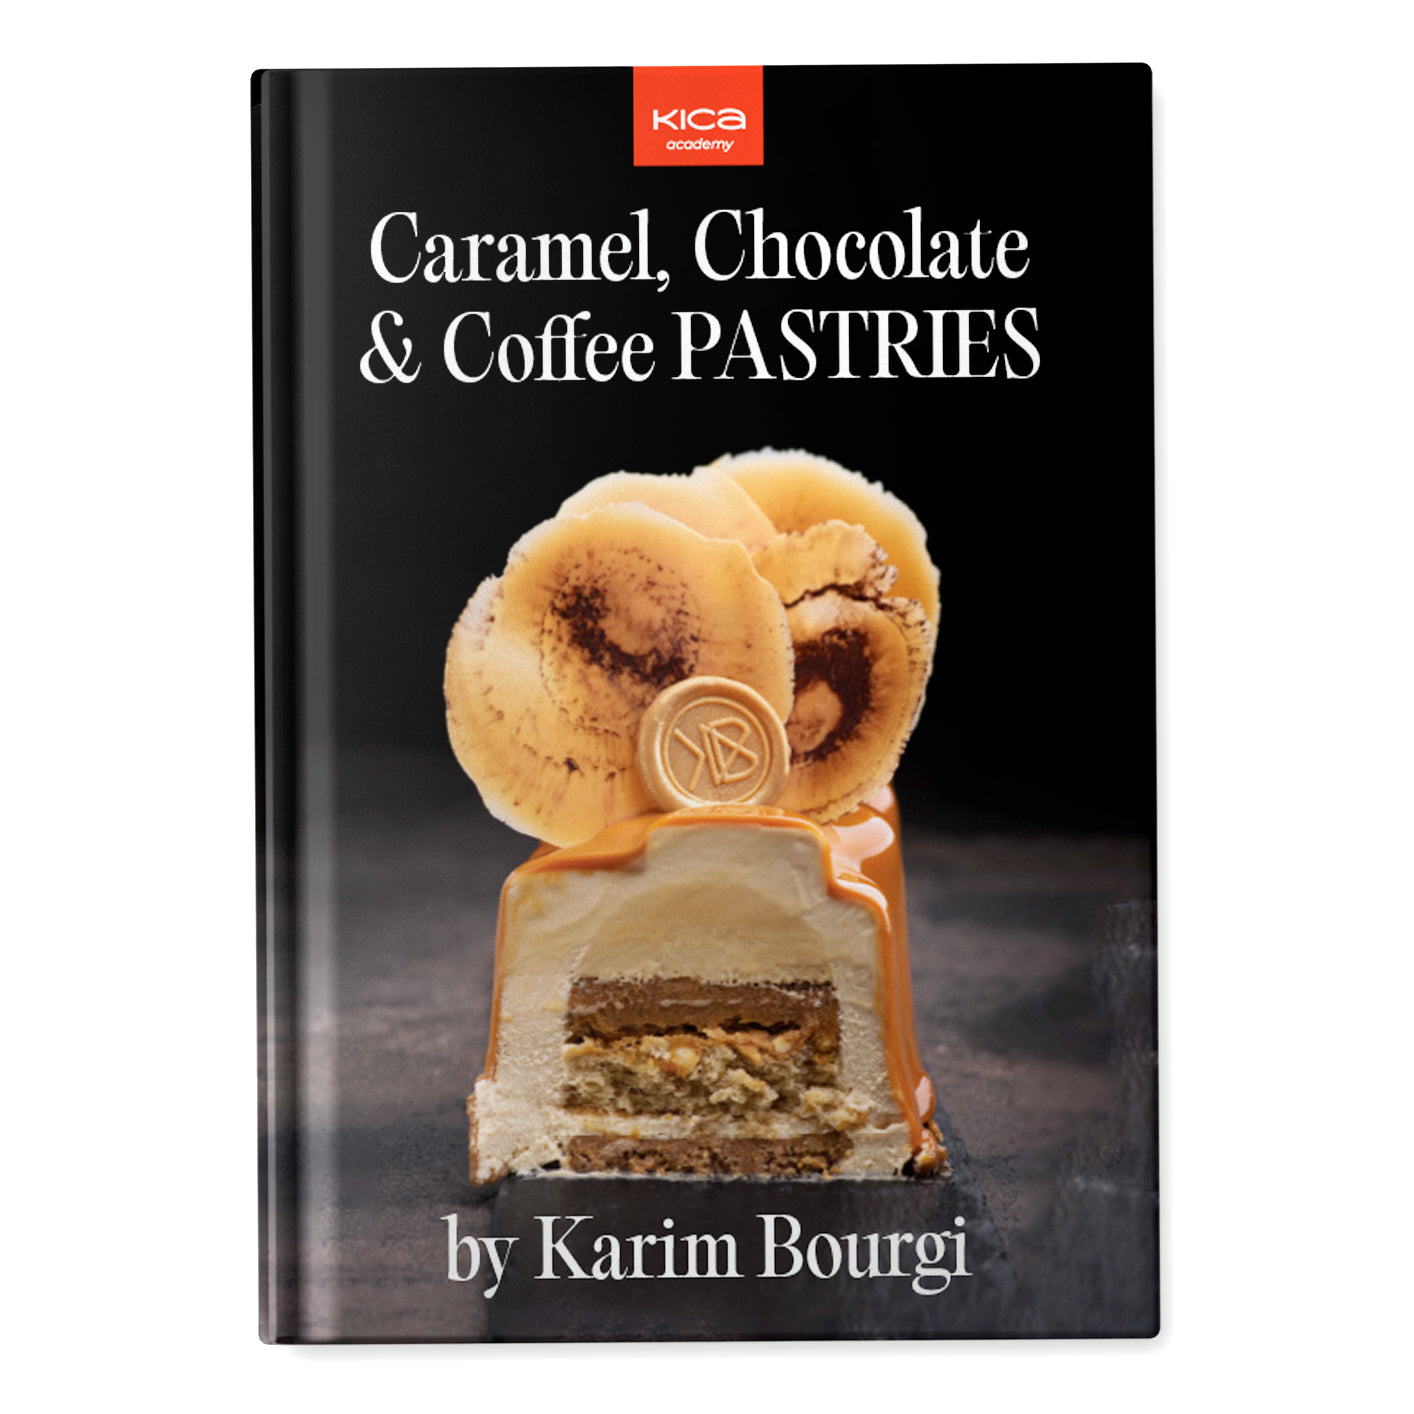 Caramel, Chocolate and Coffee Pastries by Karim Bourgi